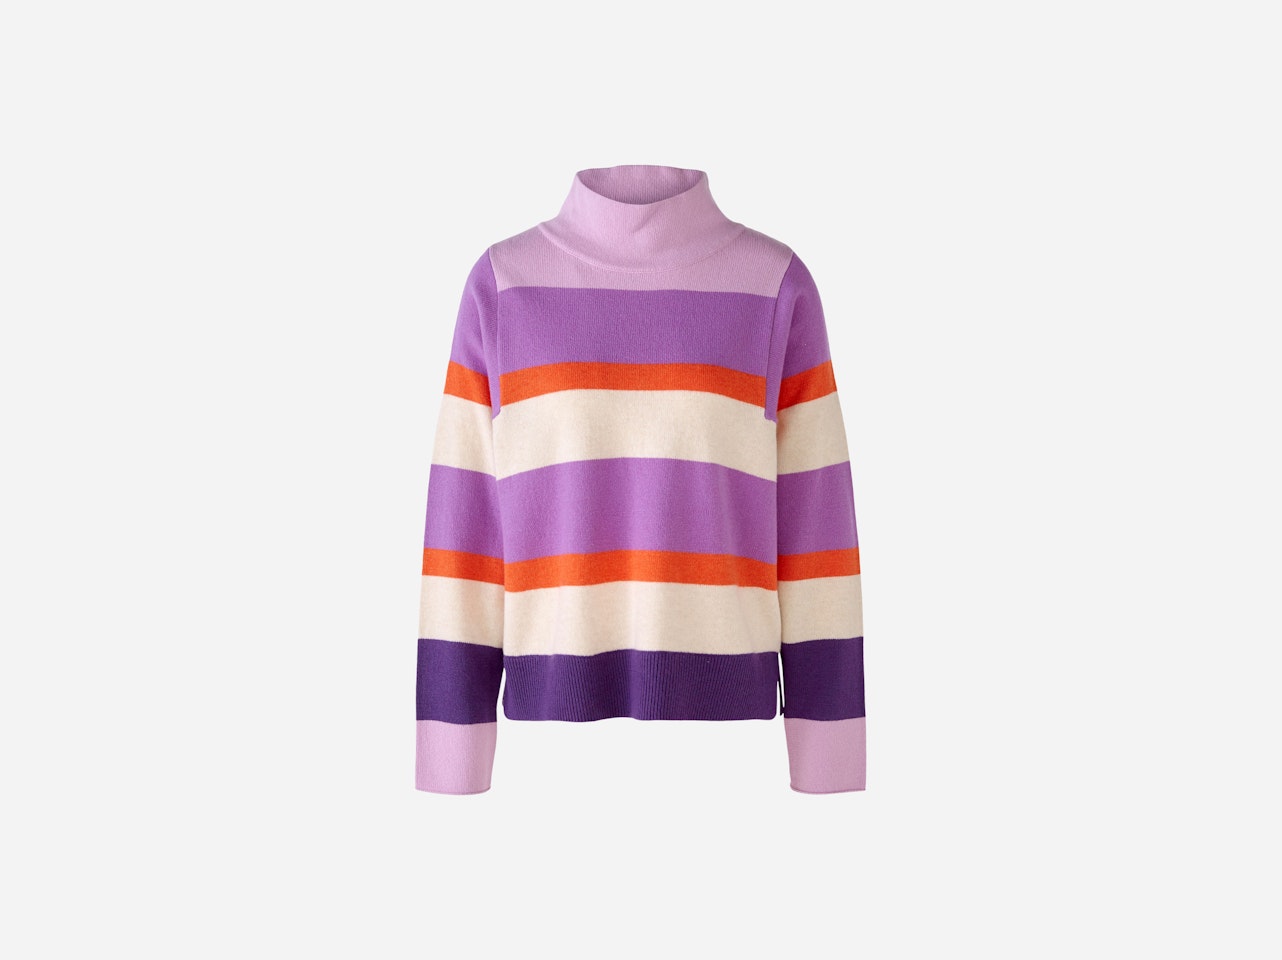 Bild 7 von Knitted jumper with stand-up collar in lilac orange | Oui